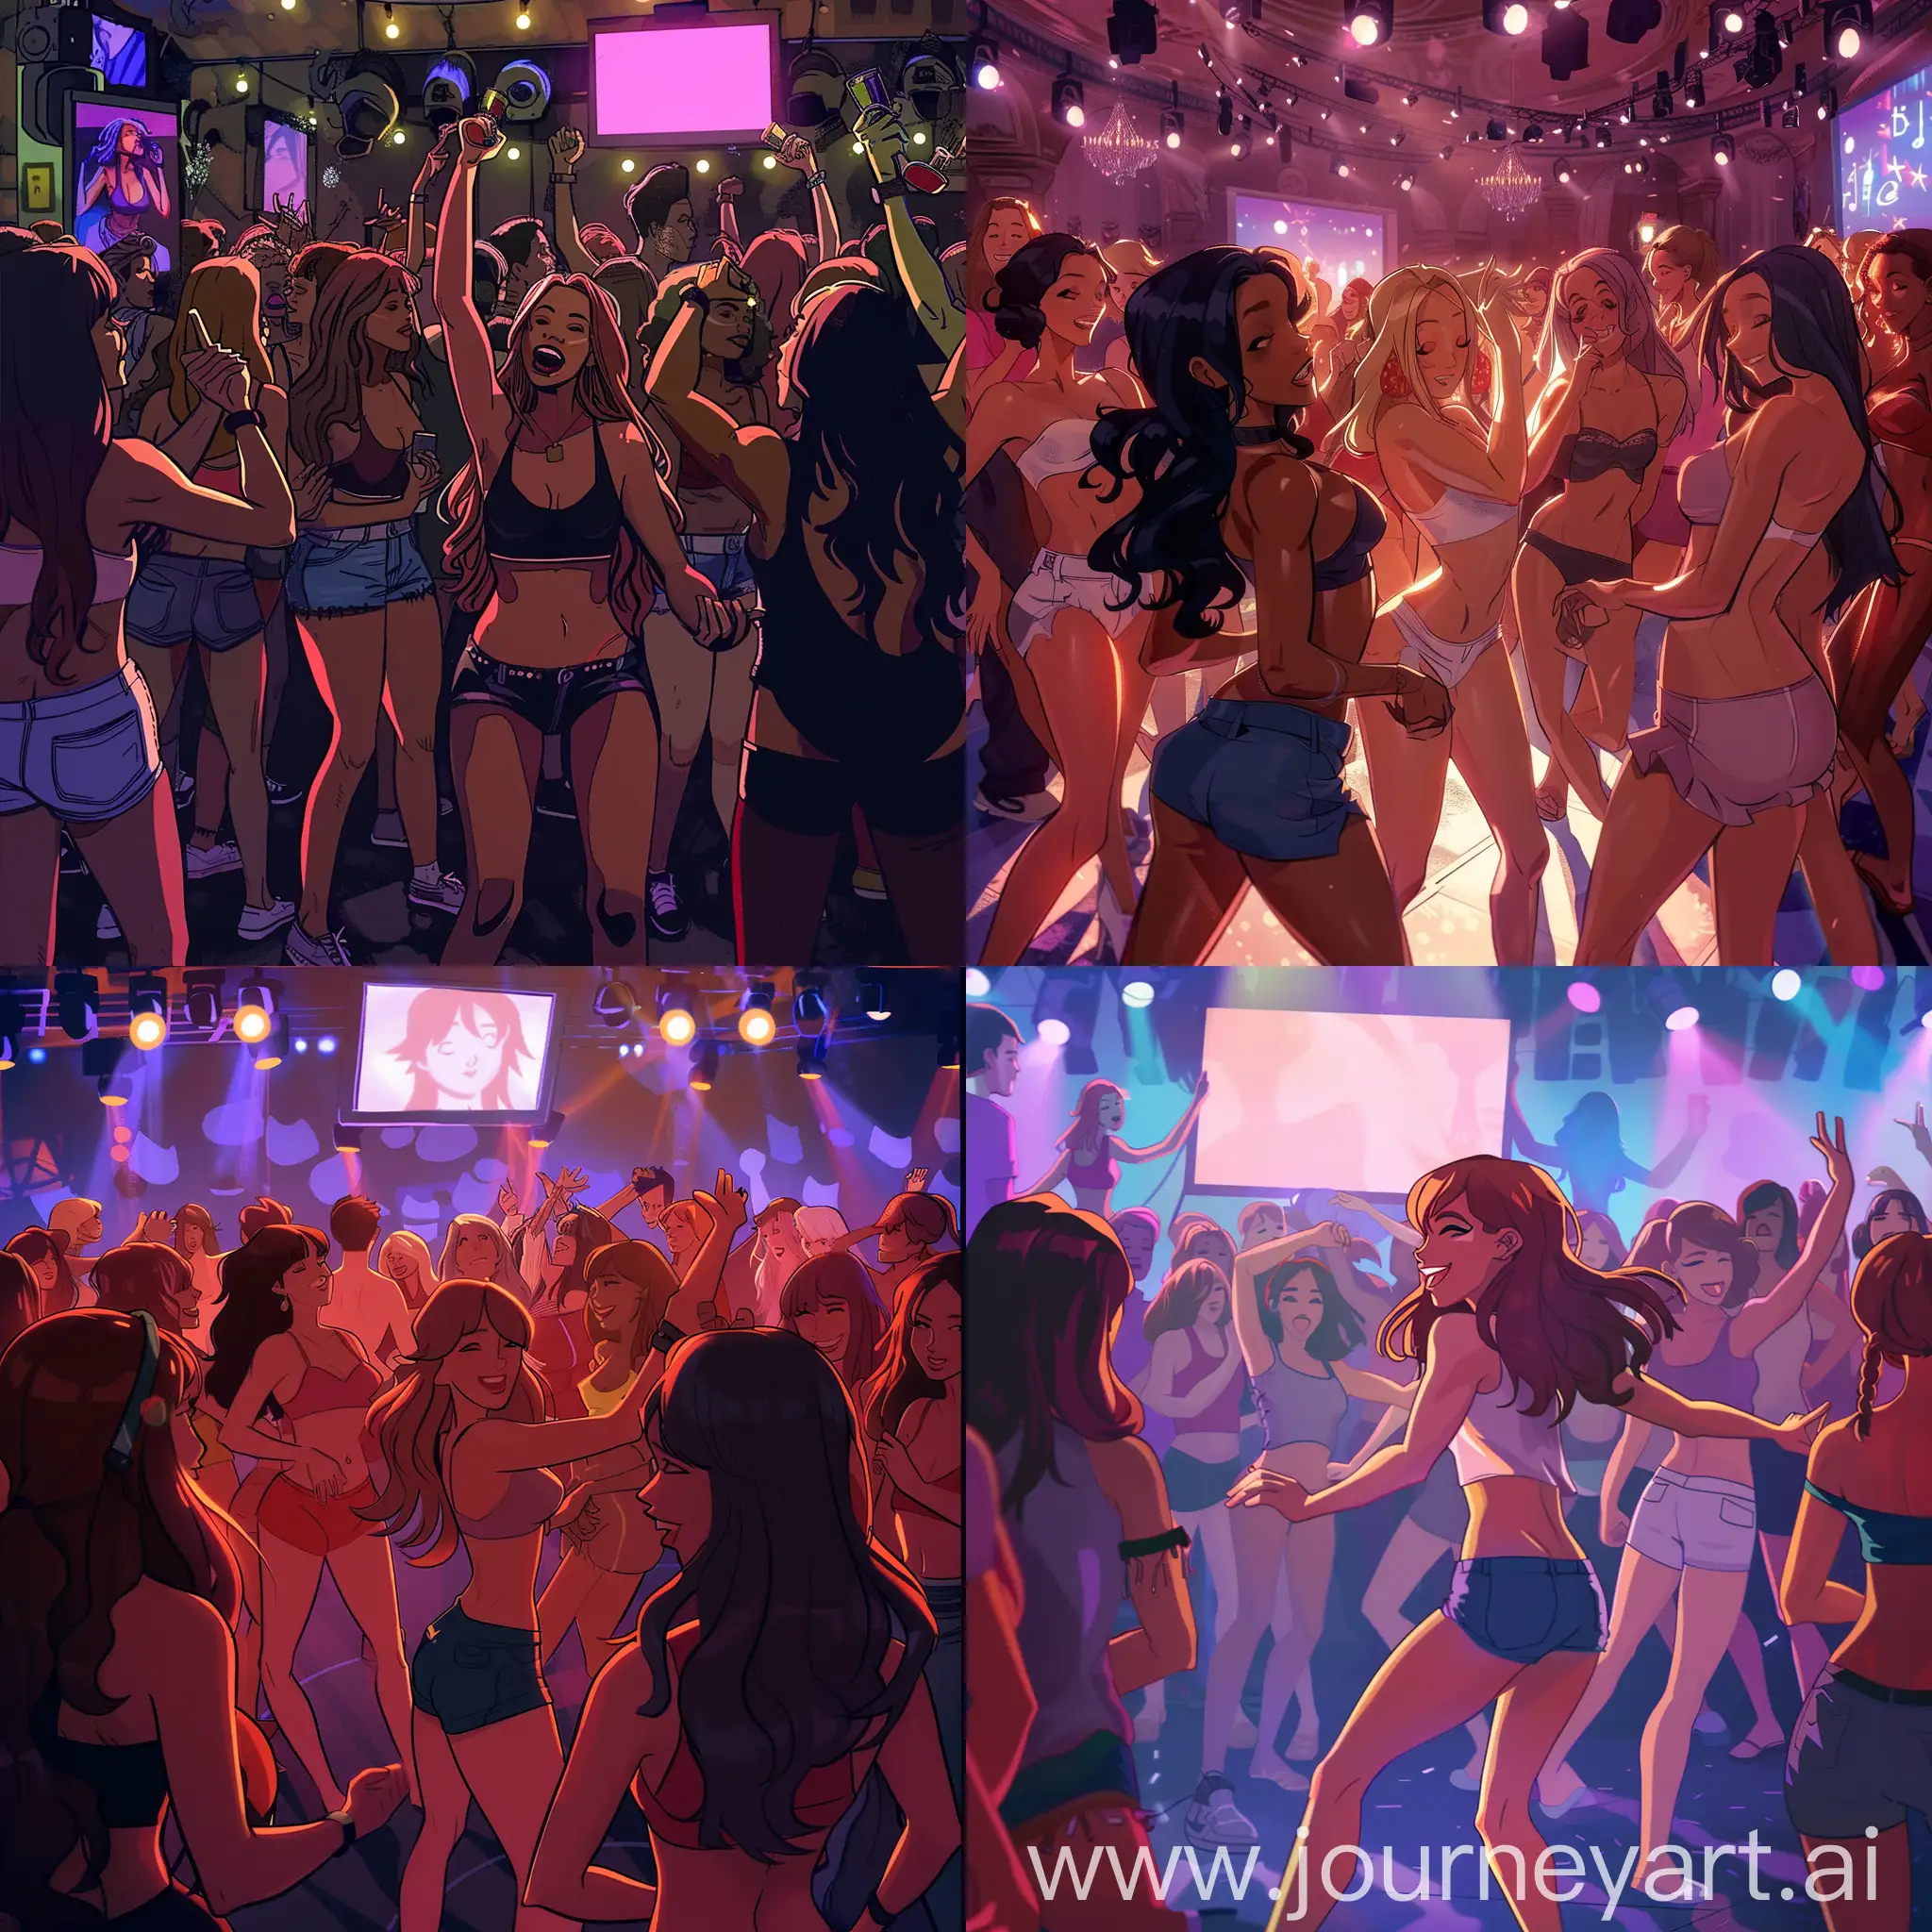 Vibrant-Cartoon-Club-Scene-with-Dancing-Girls-and-Blank-Screen